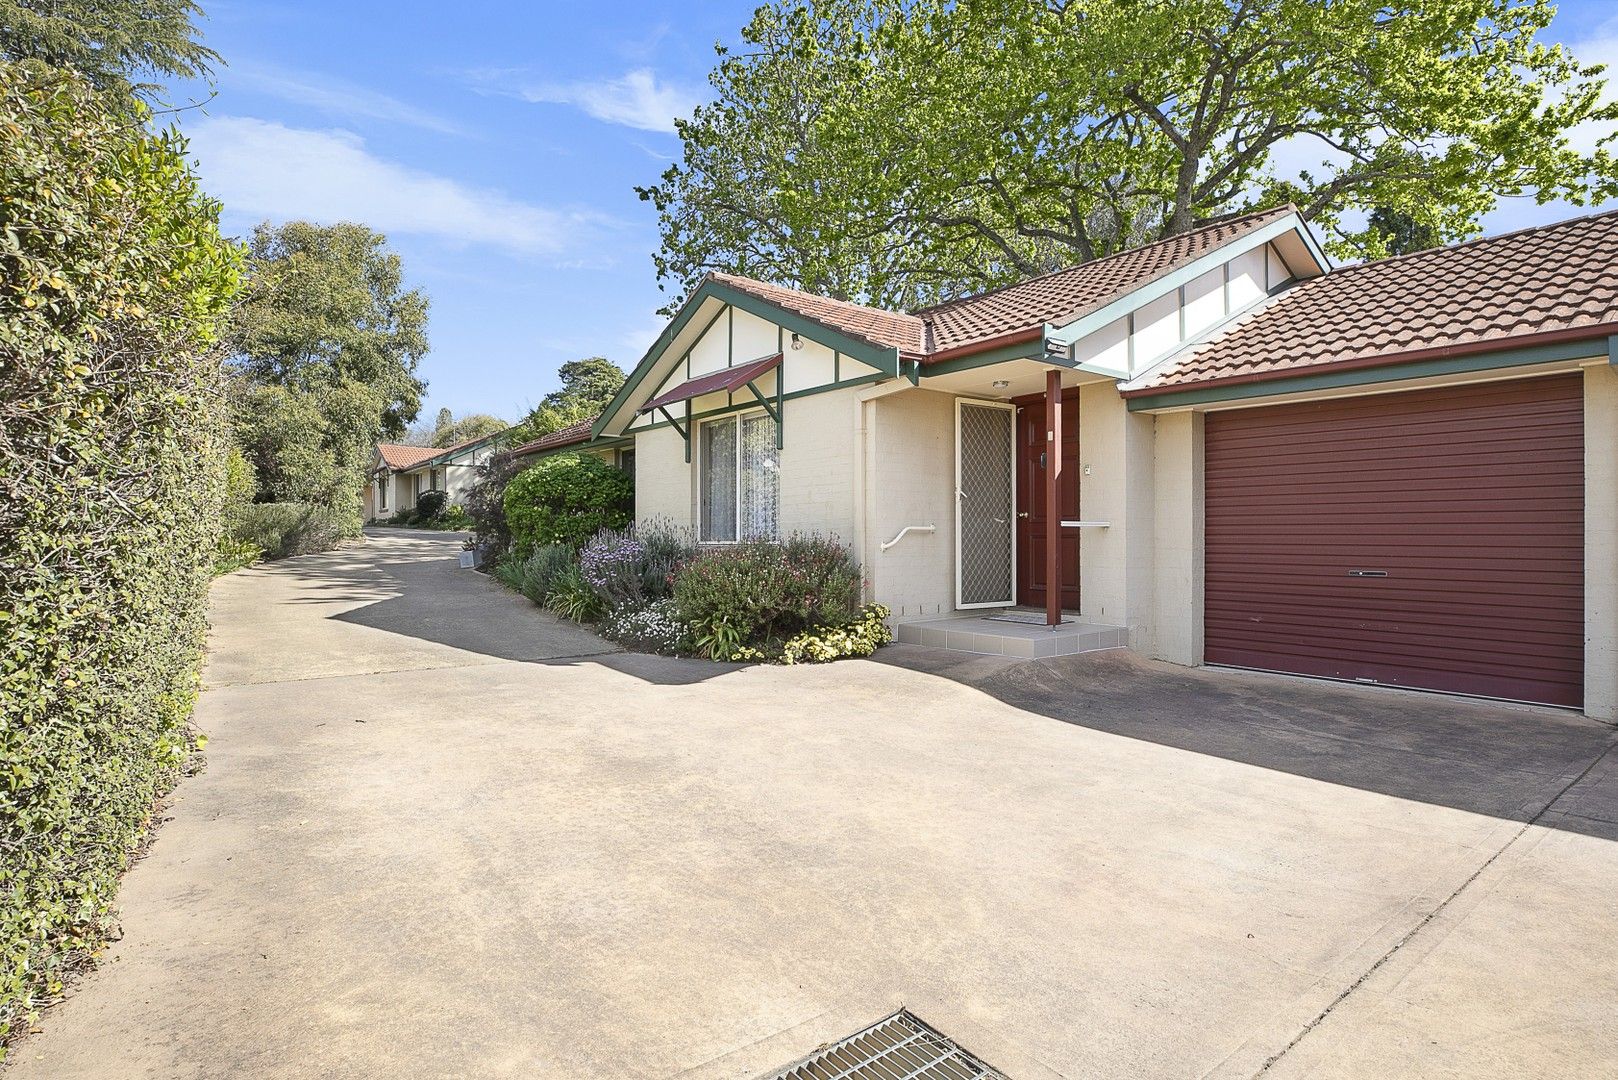 3 bedrooms Villa in 2/27 Ascot Road BOWRAL NSW, 2576